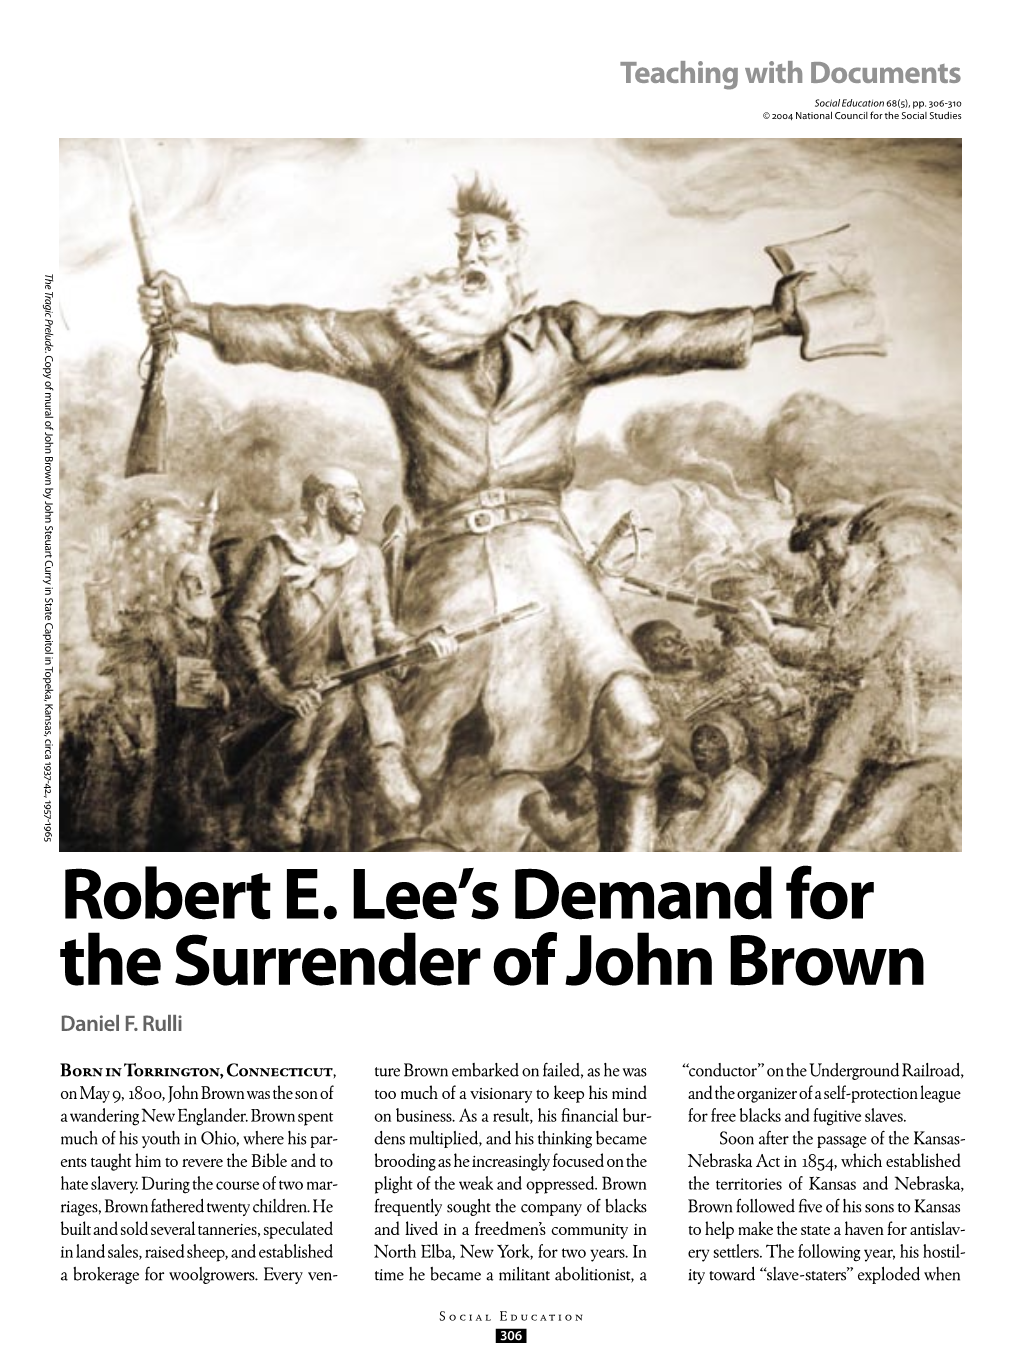 Robert E. Lee's Demand for the Surrender of John Brown